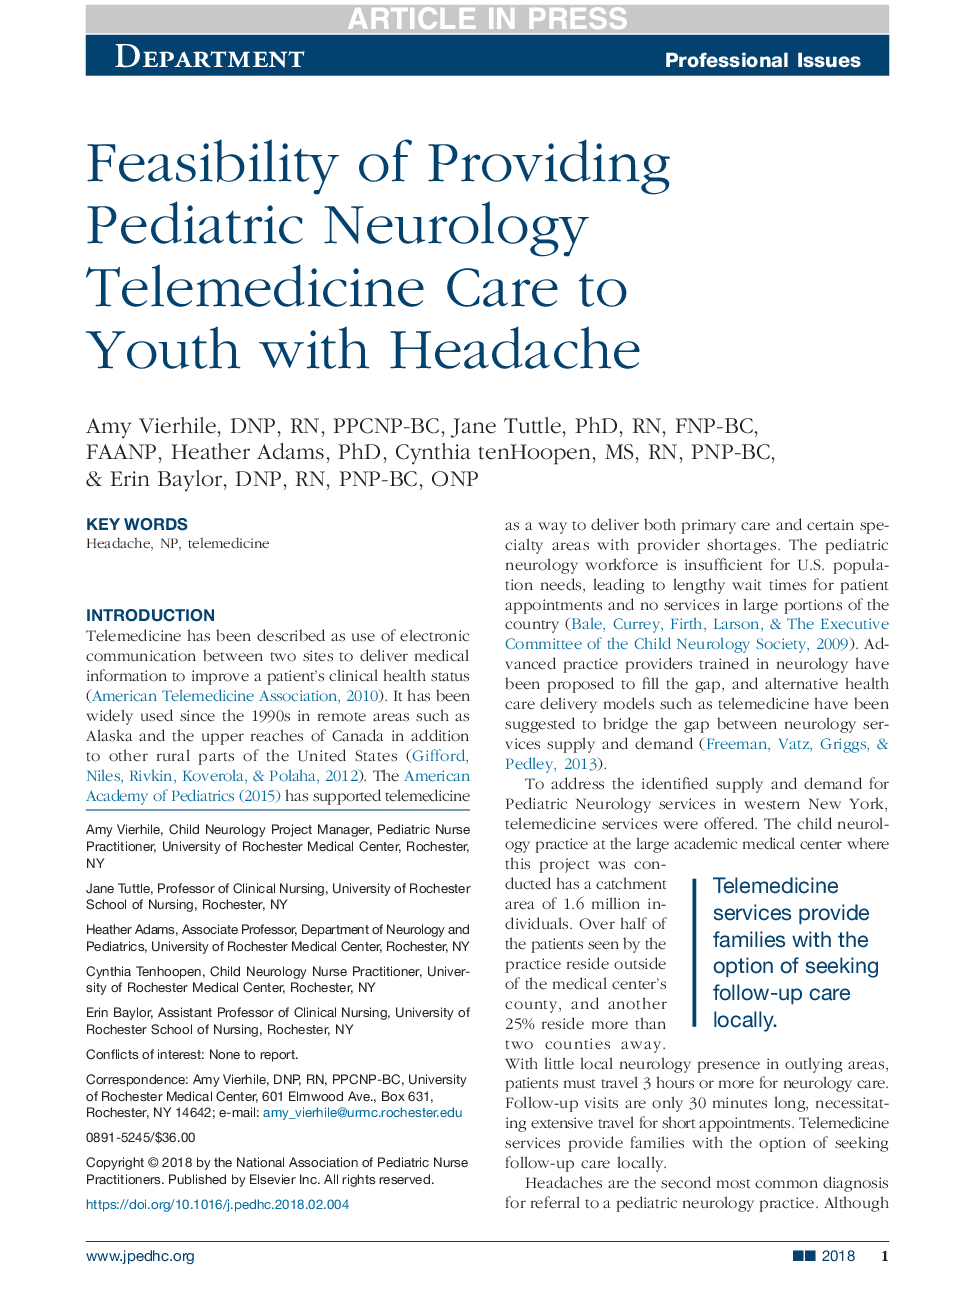 Feasibility of Providing Pediatric Neurology Telemedicine Care to Youth with Headache